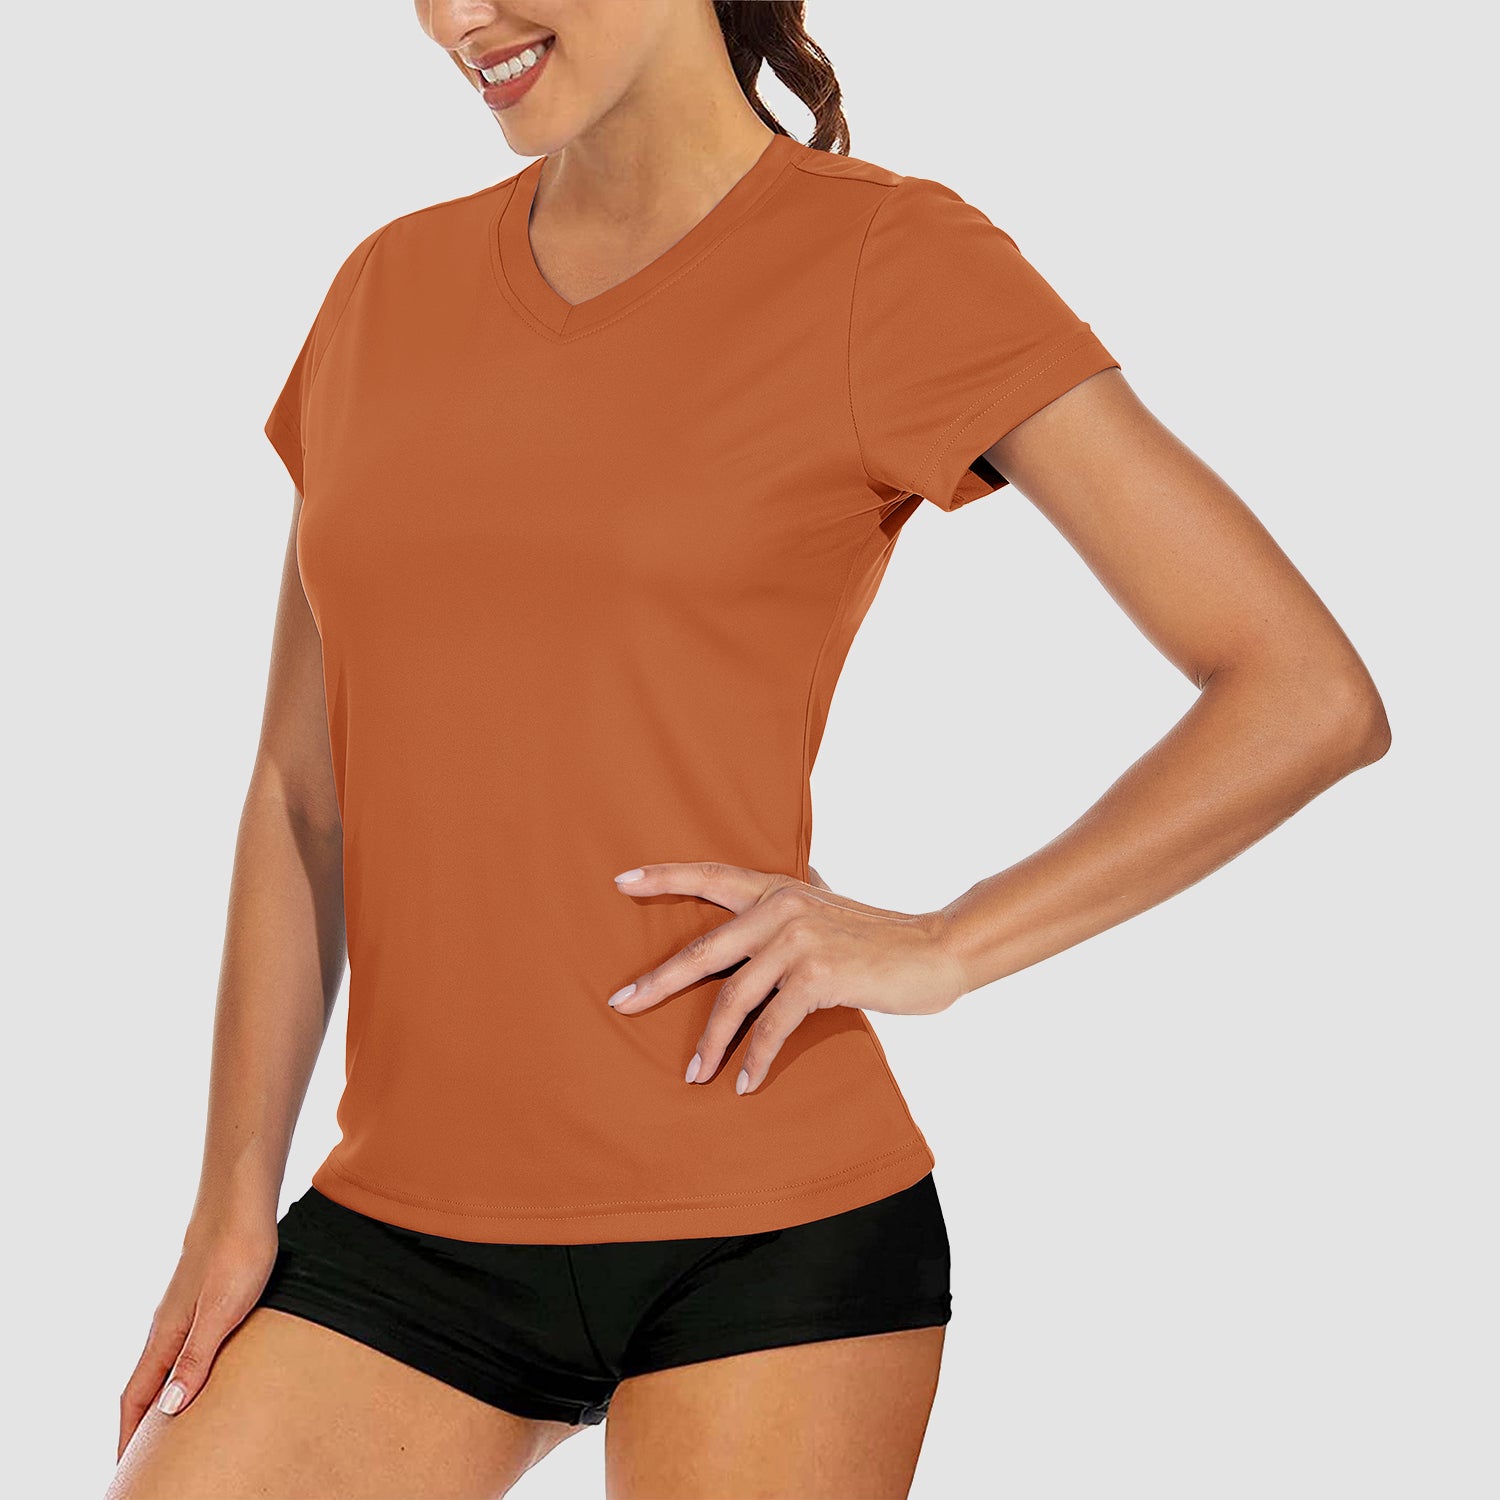 Women T-shirt Short Sleeve Yoga Wear Running Tops Quick Dry T